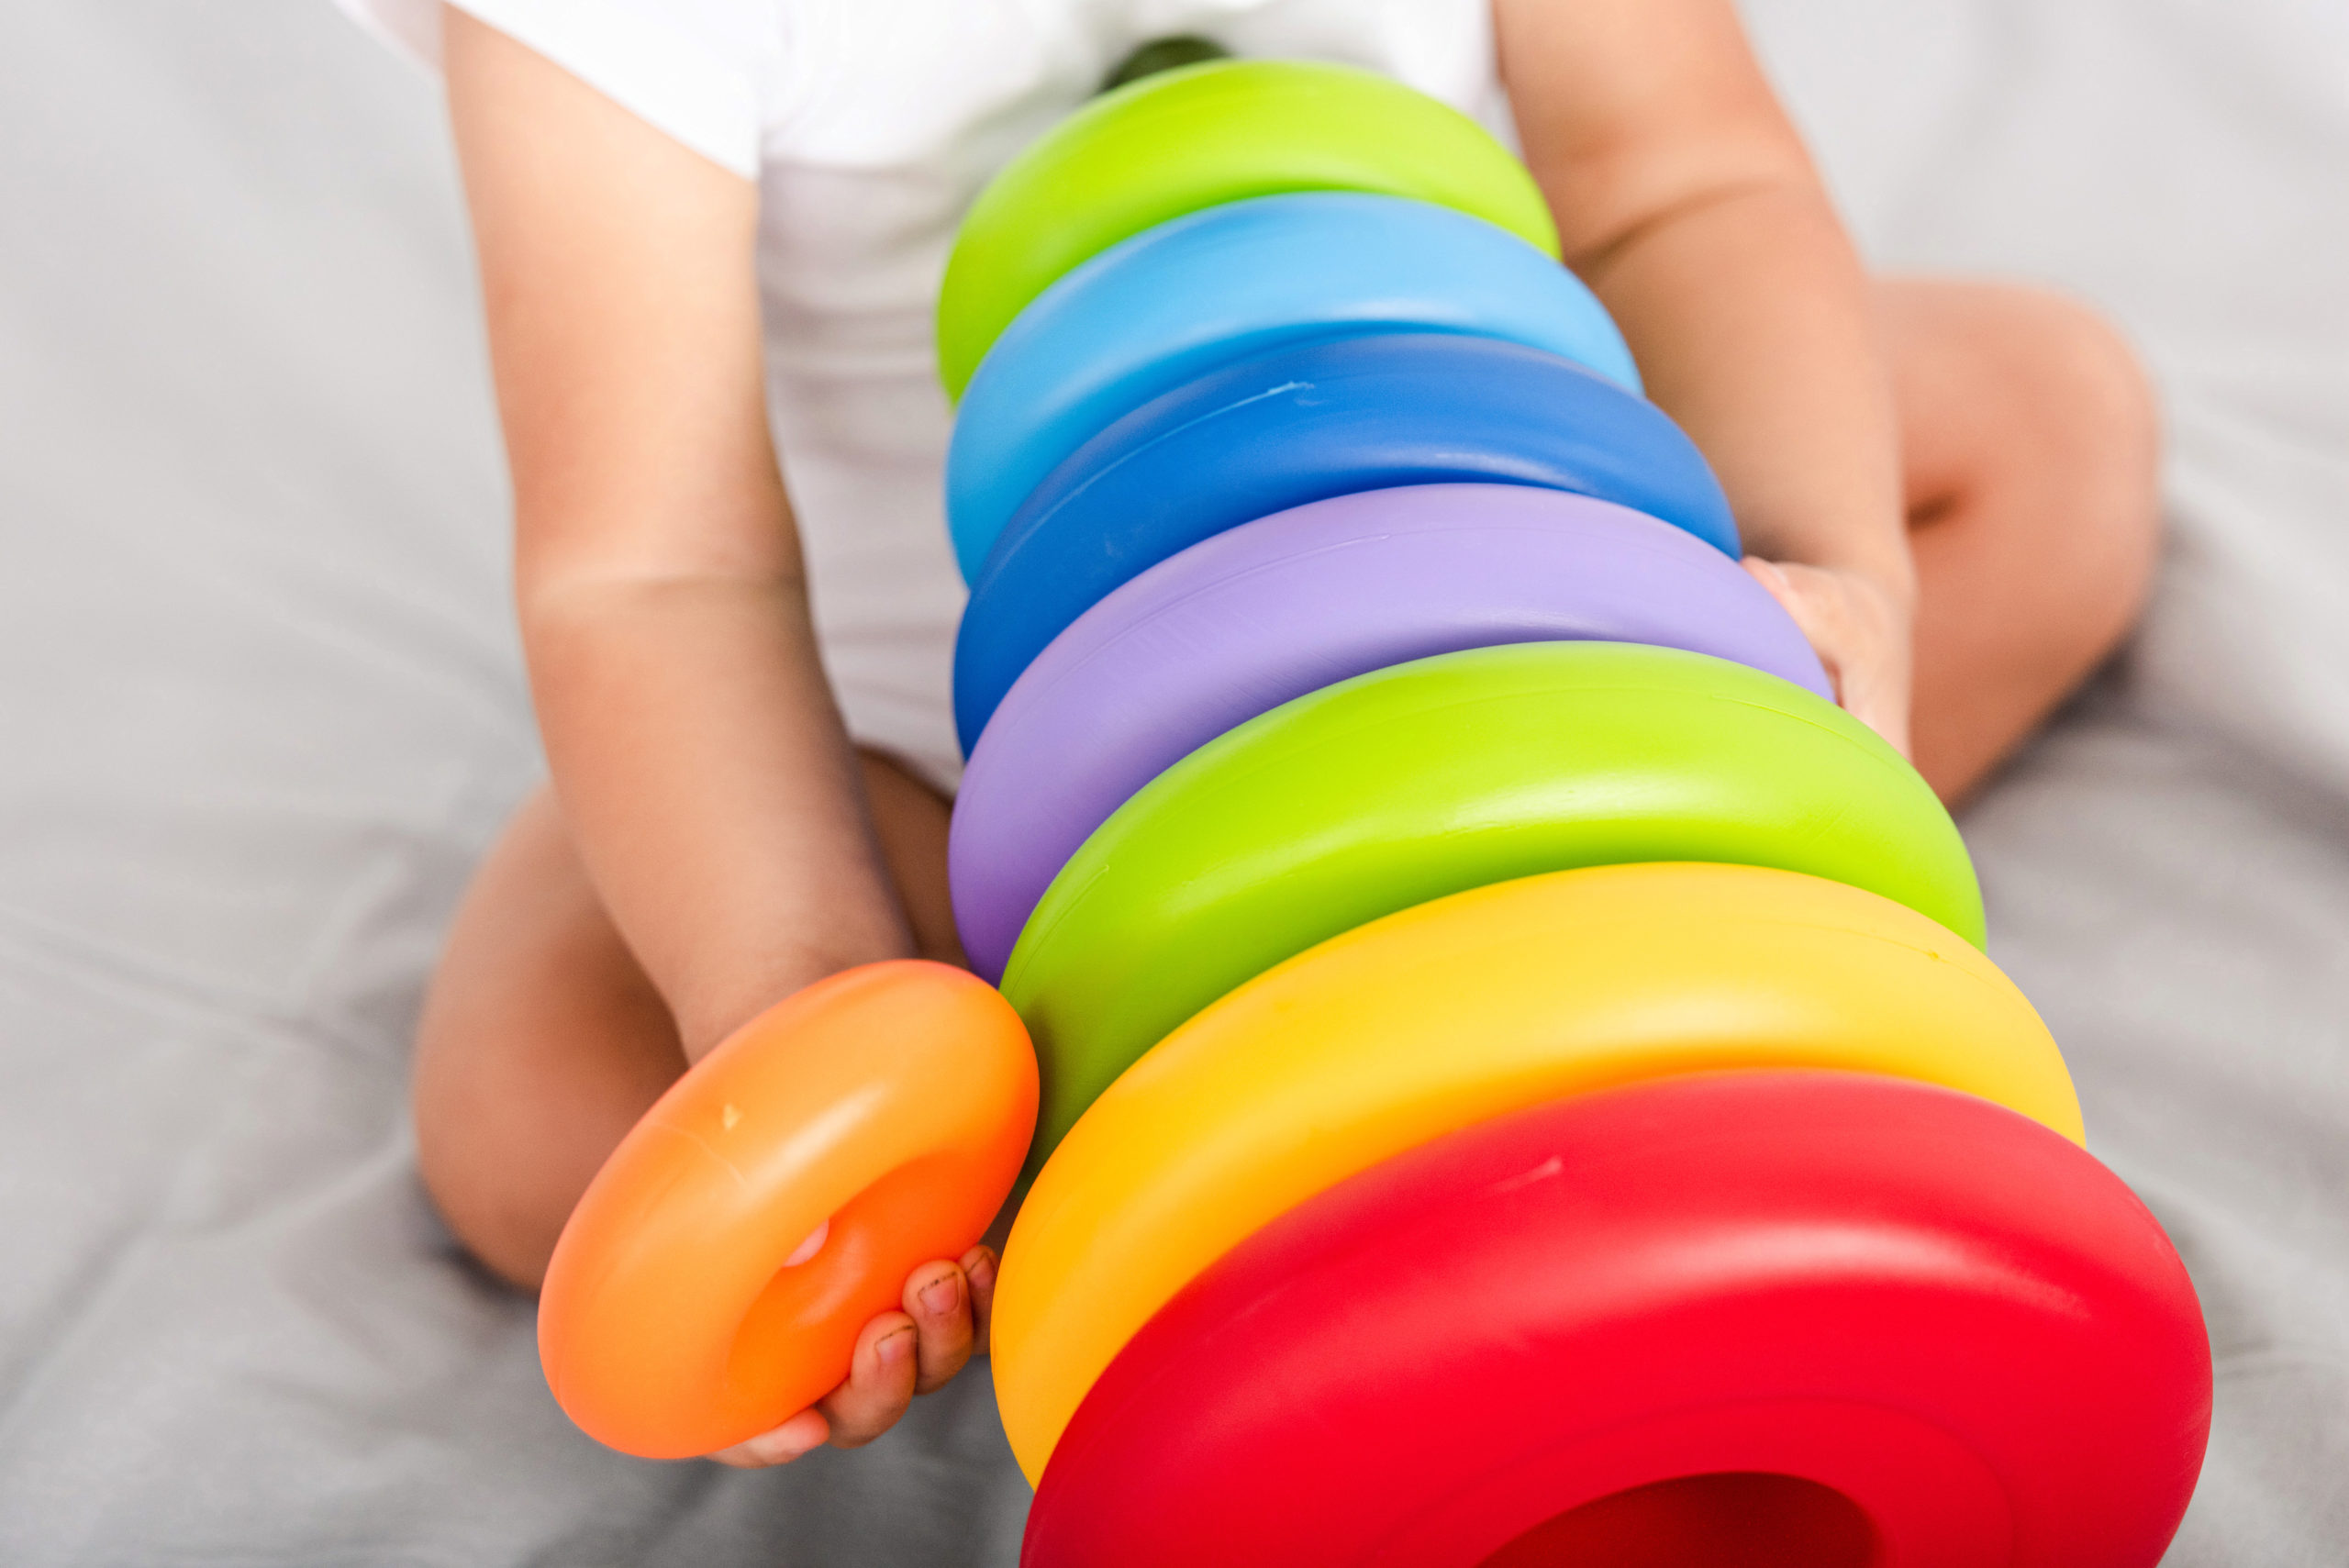 best infant toys for cognitive development